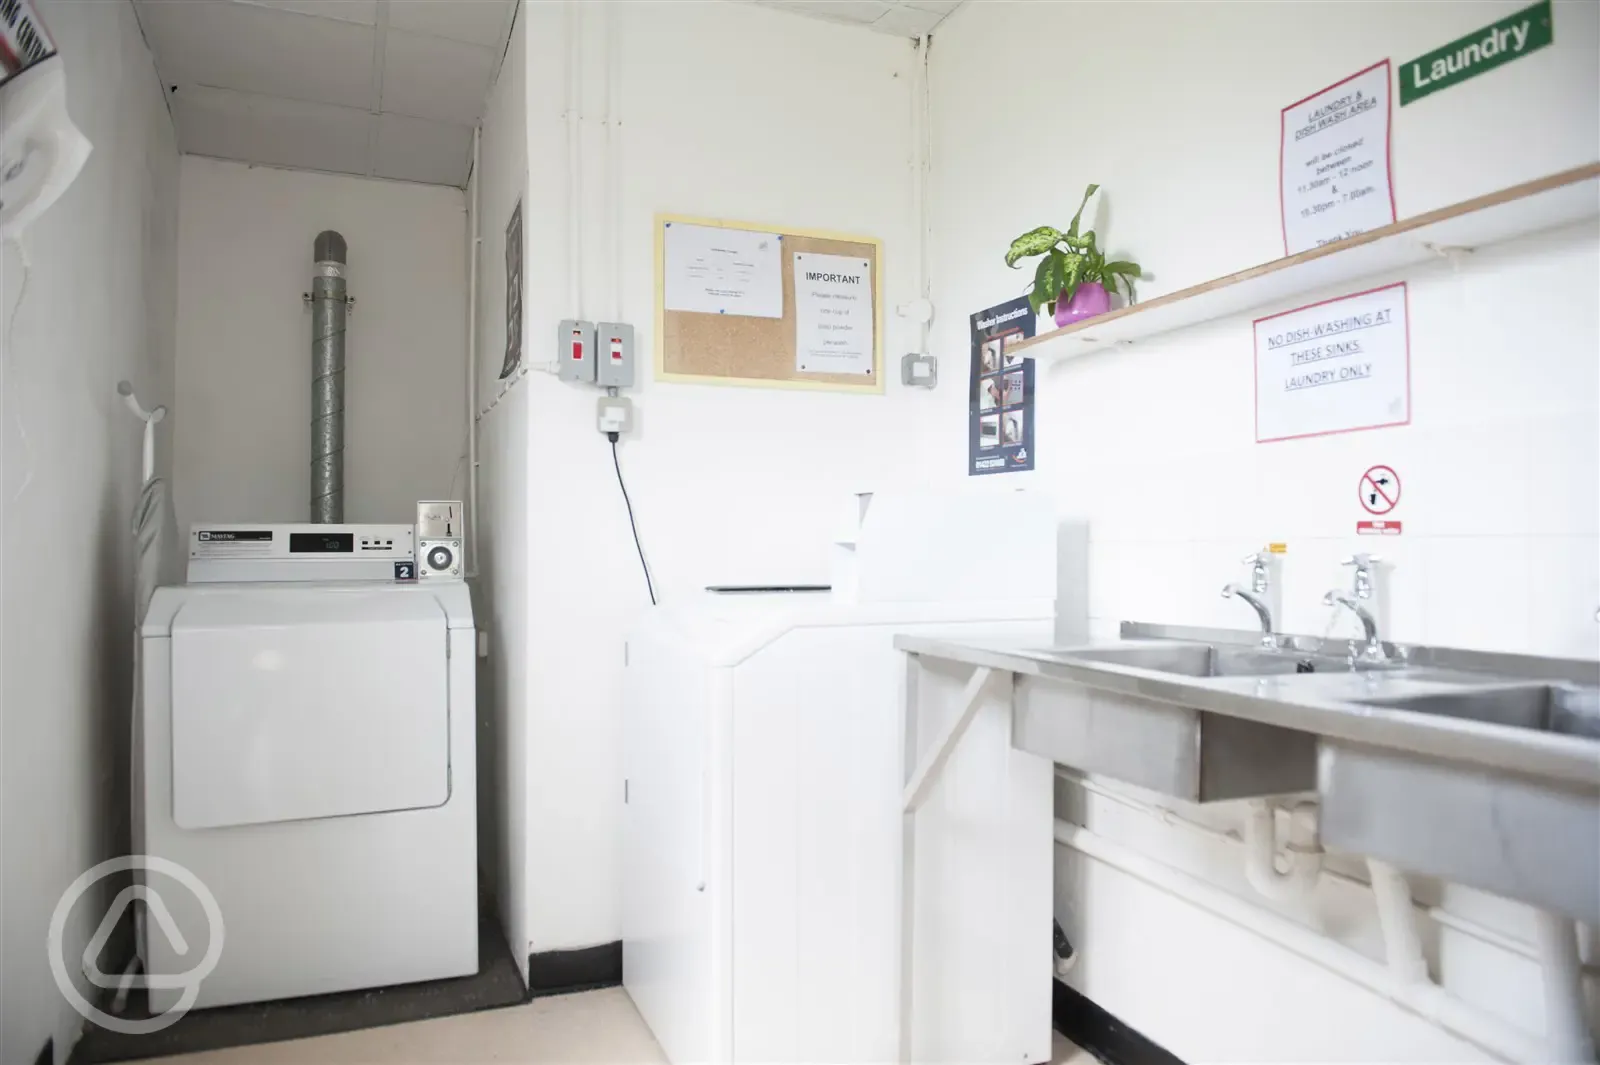 Washing and laundry facilities